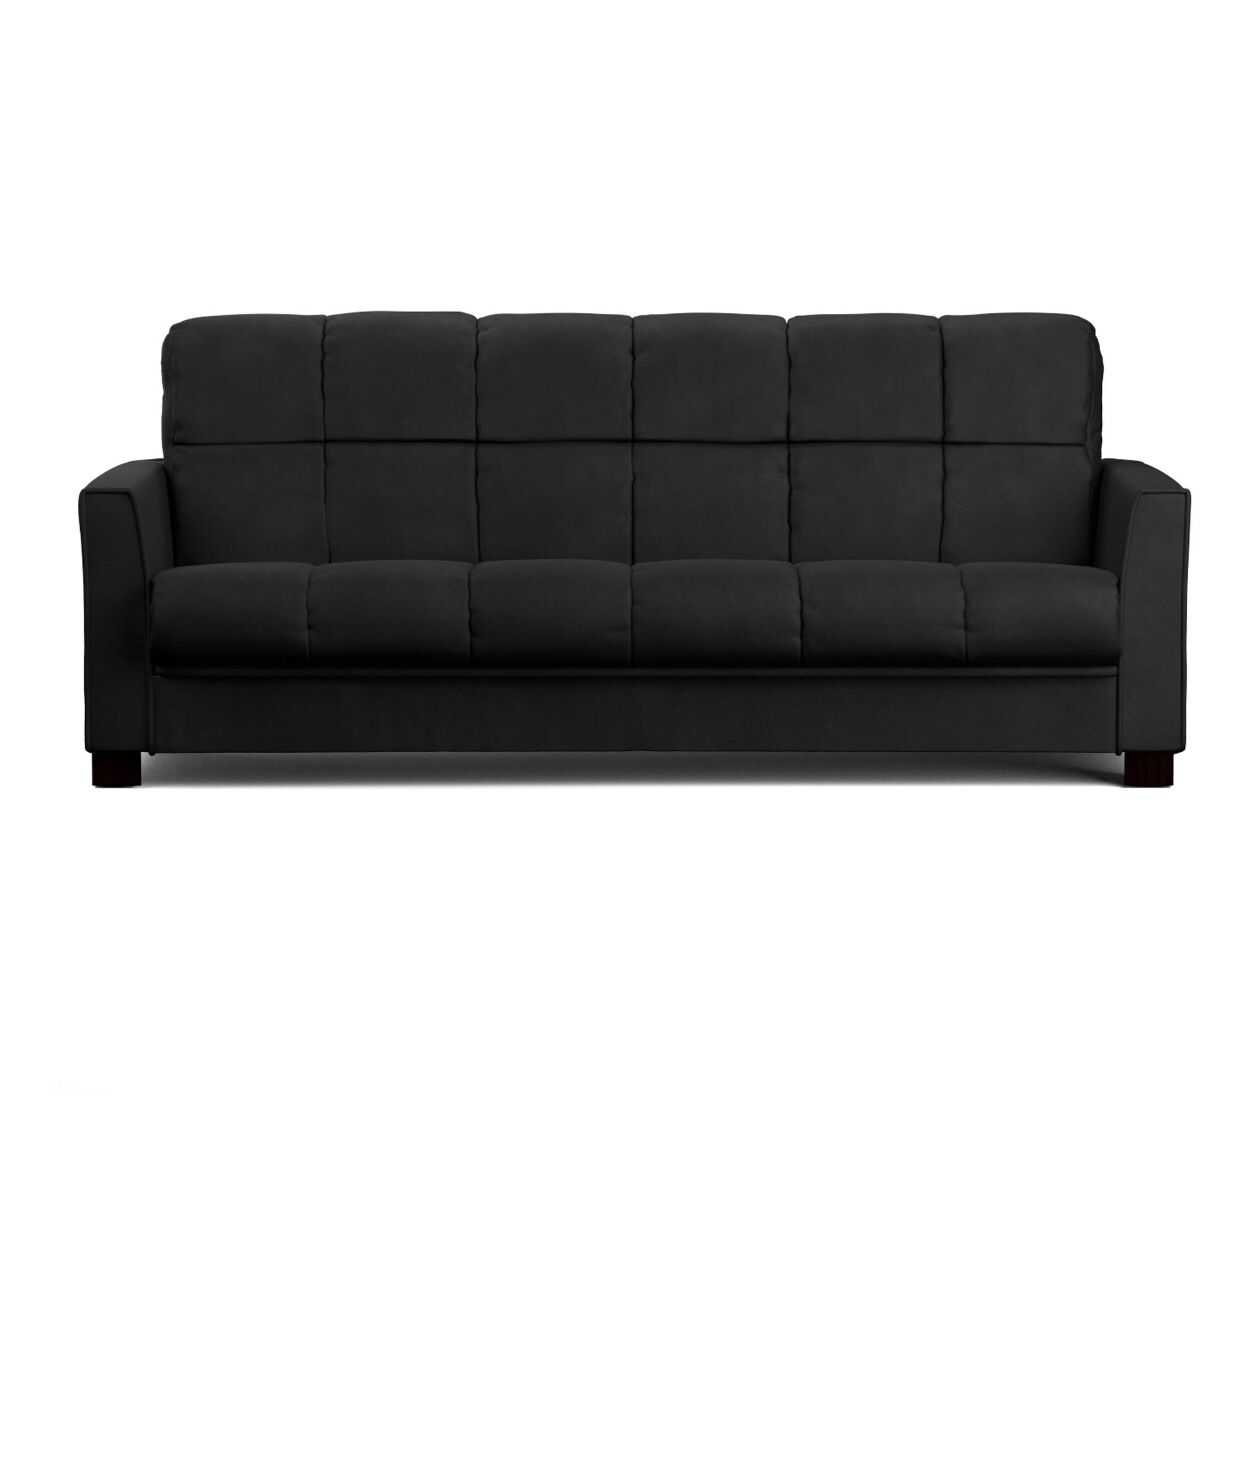 Mainstays Baja Futon Sofa Sleeper Bed, Black